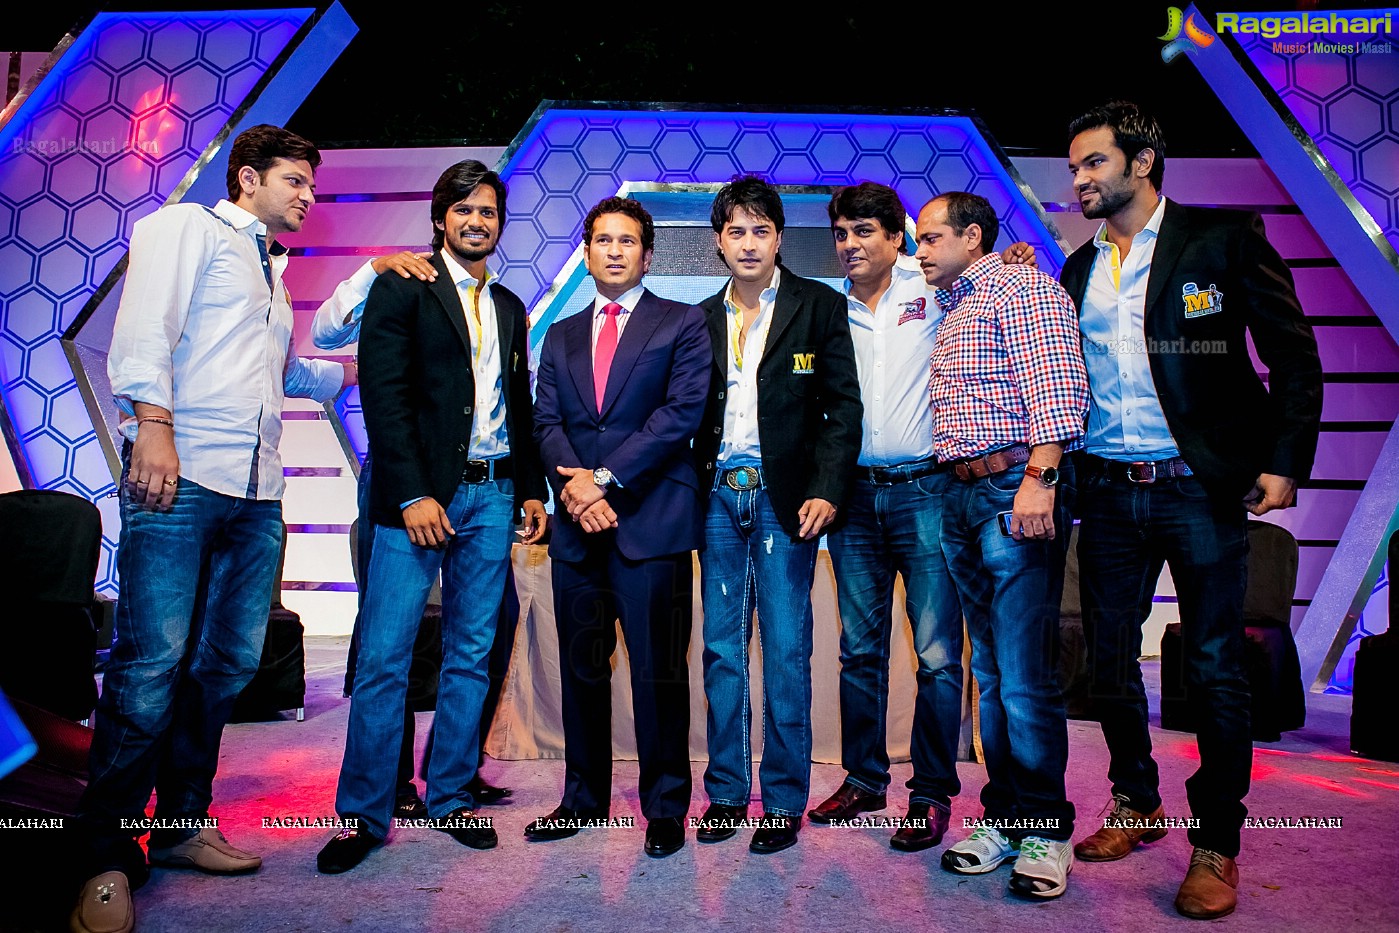 Sachin Tendulkar launches Celebrity Cricket League 4